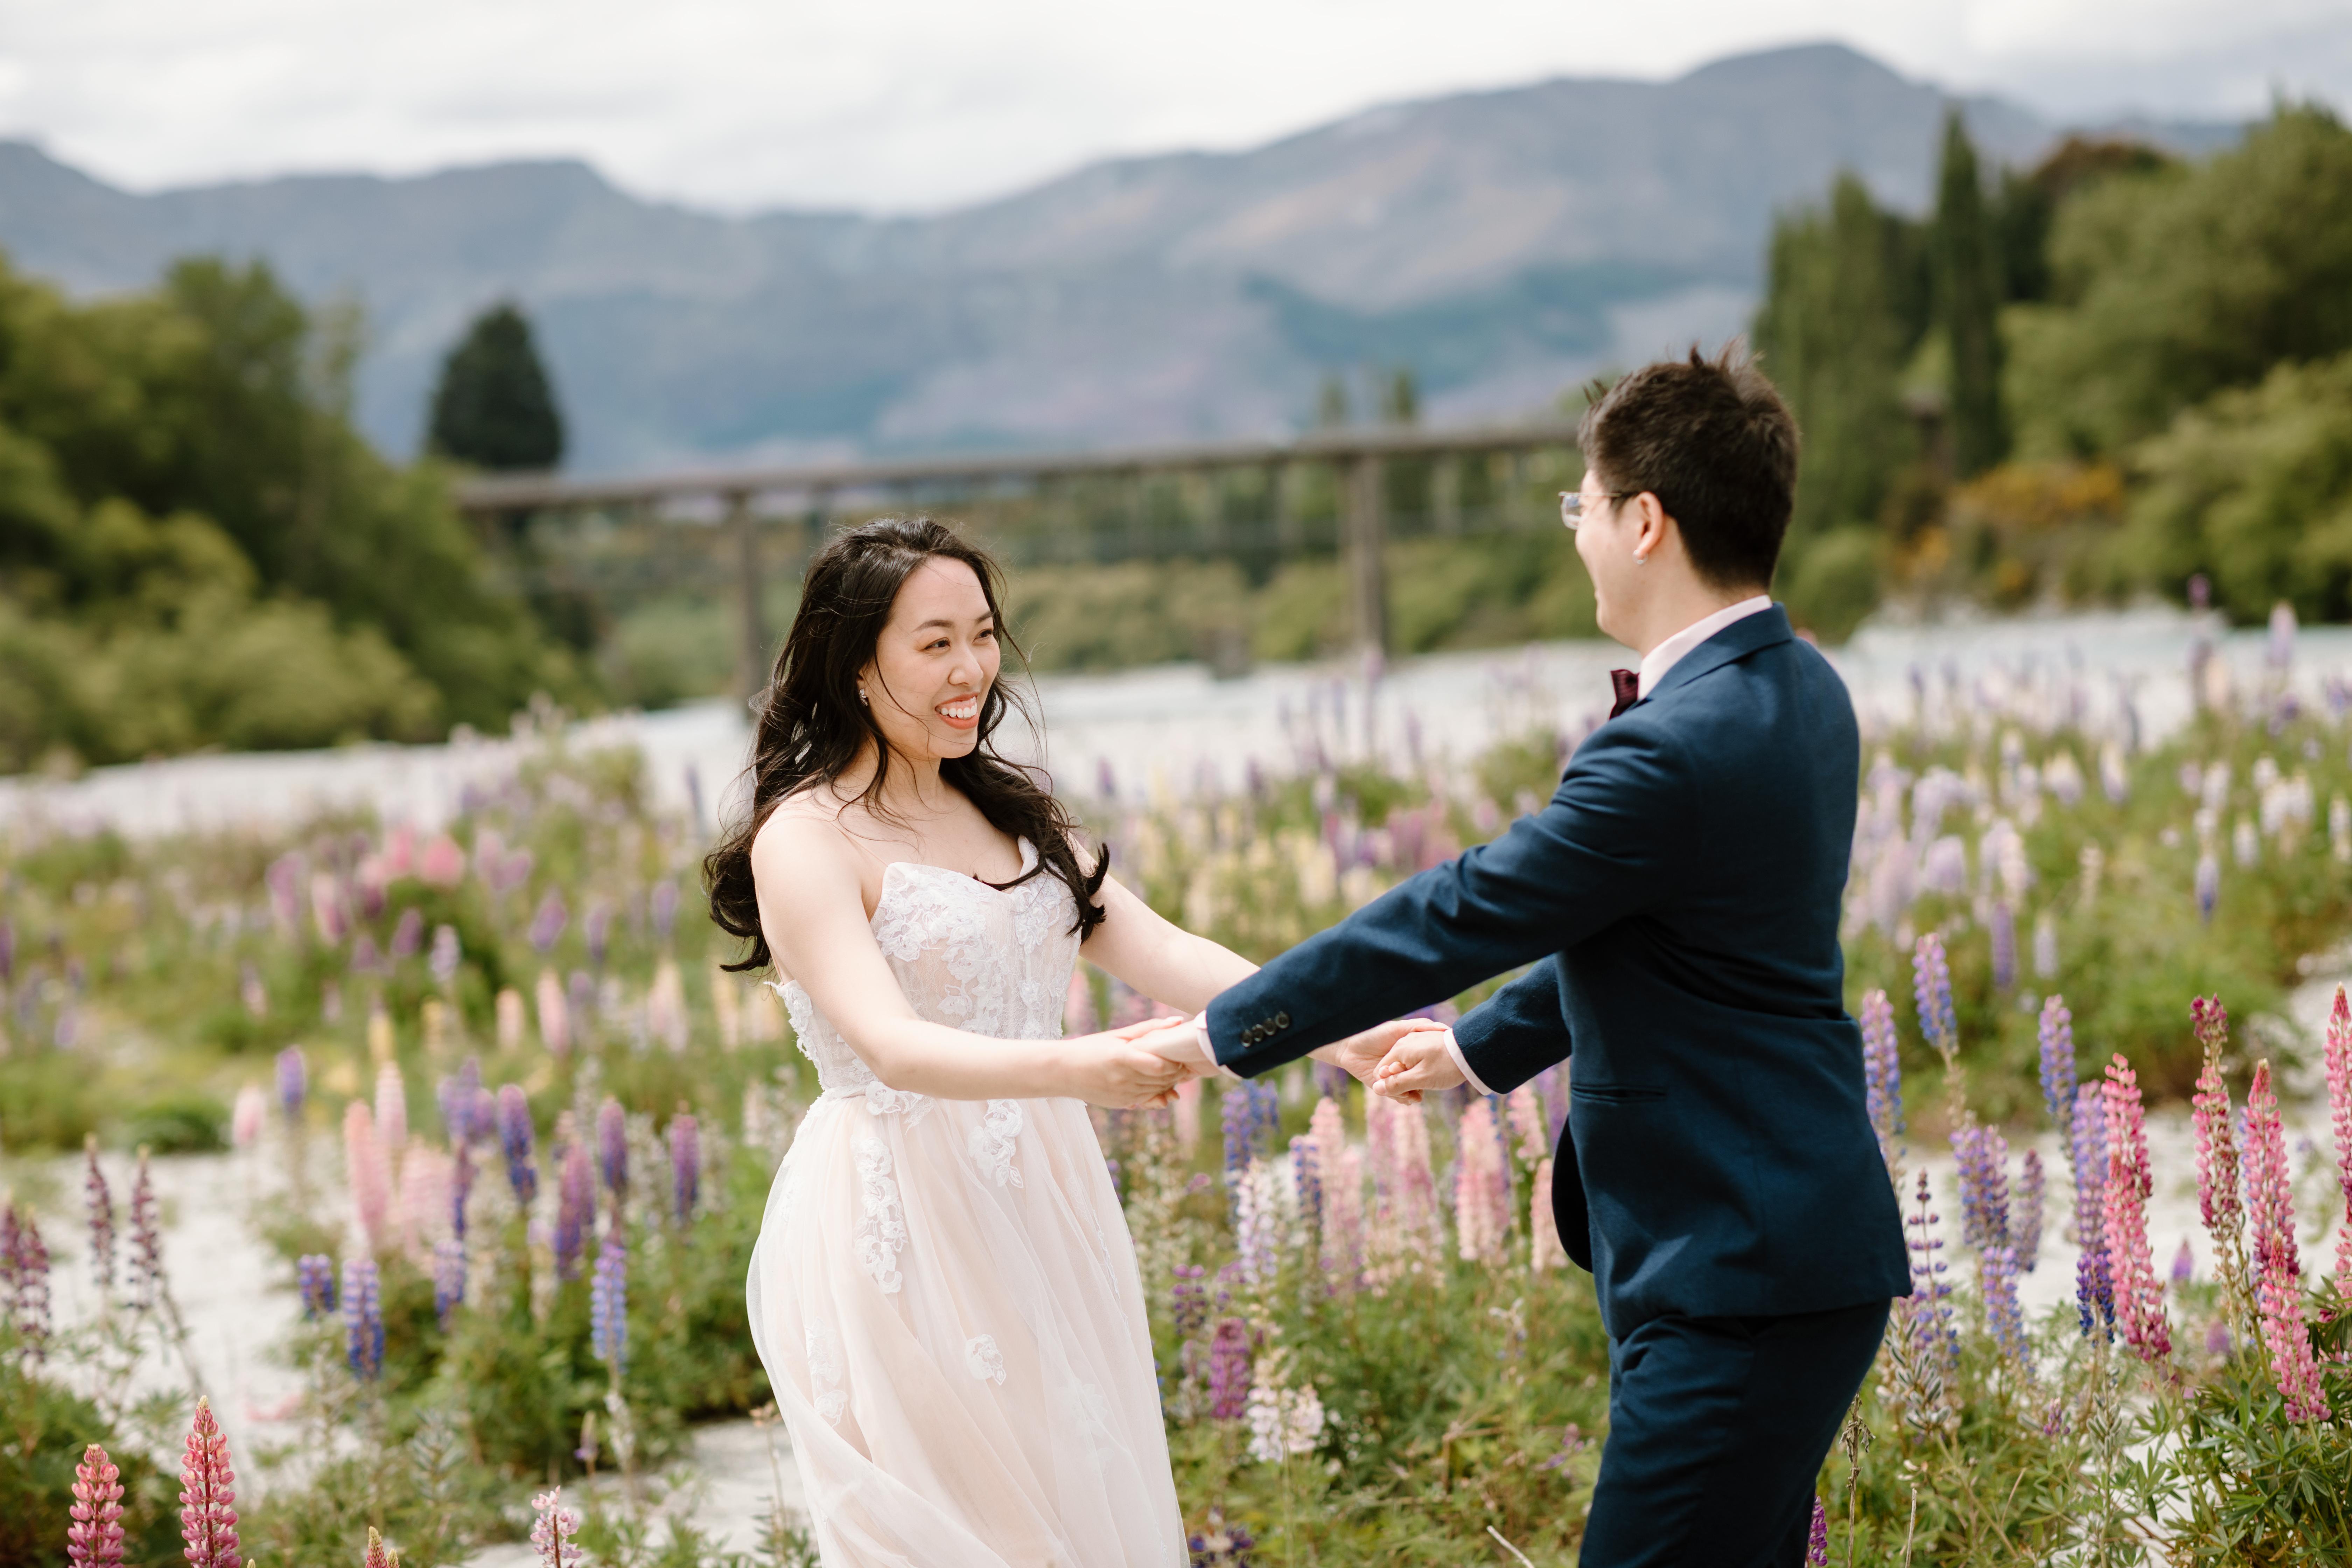 The Wedding Website of Samantha Jang and Harvey Ngai